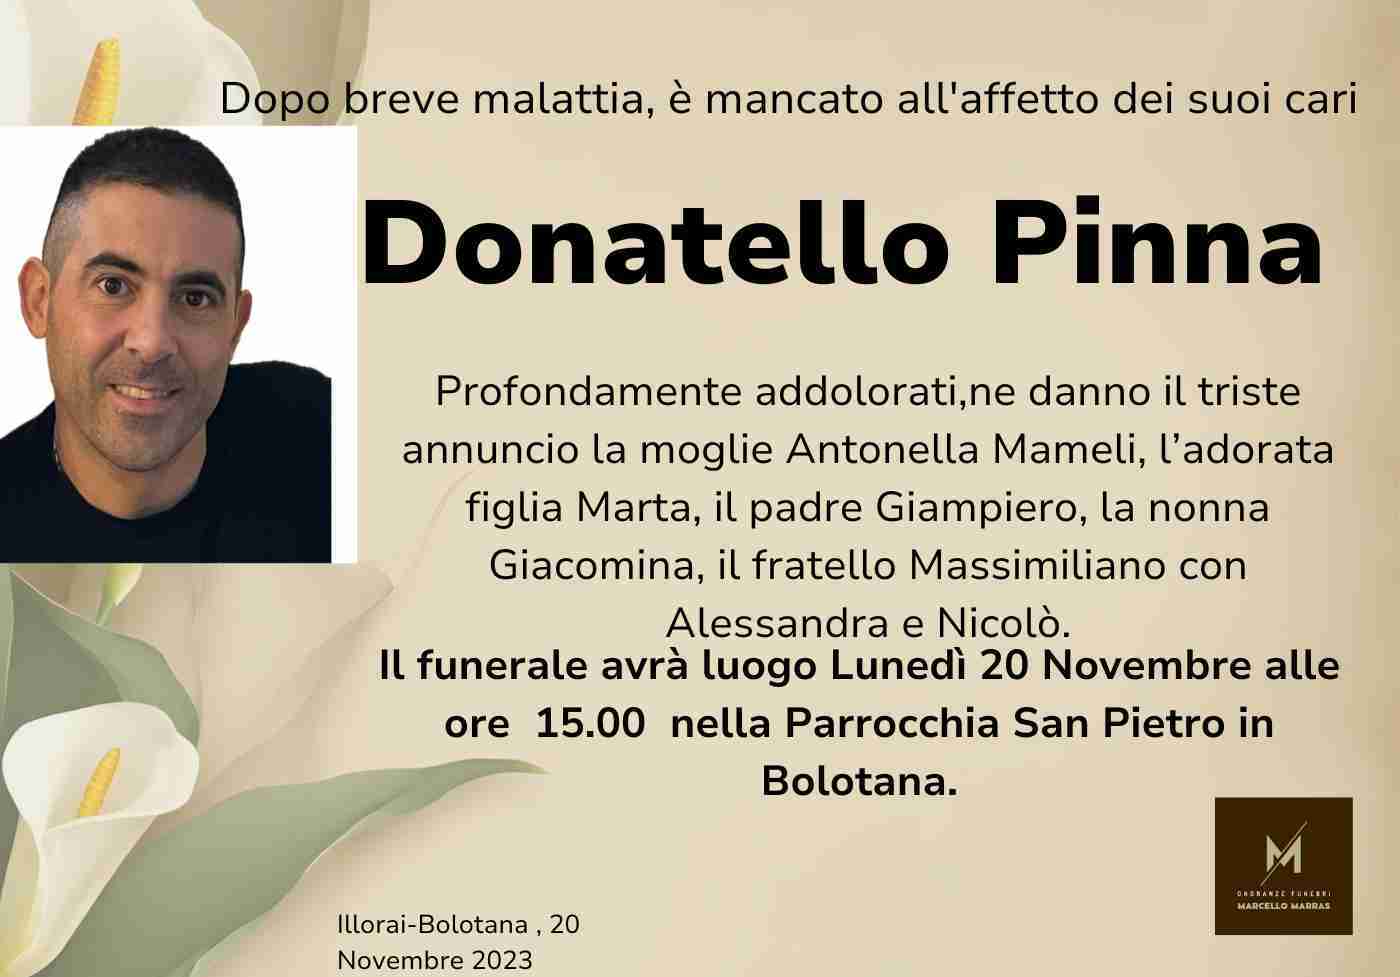 Donatello Pinna